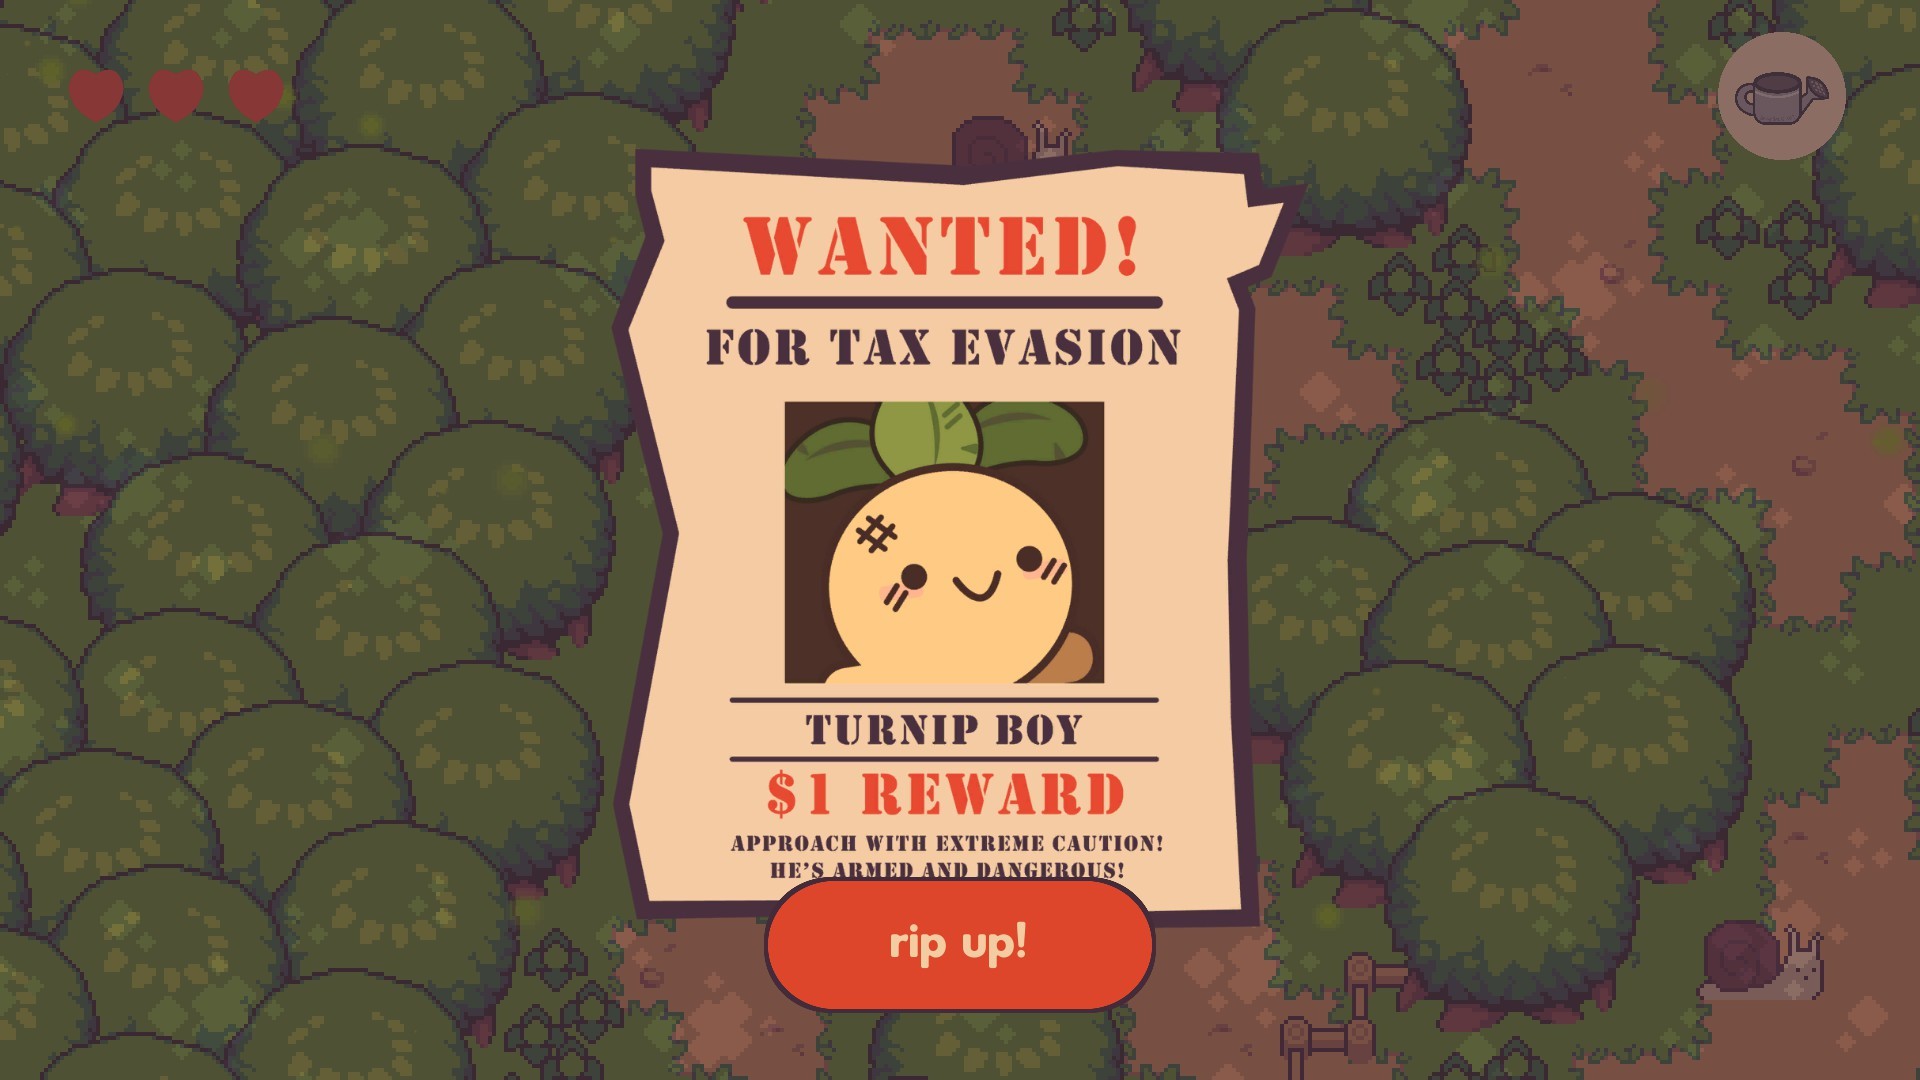 turnip boy commits tax evasion download